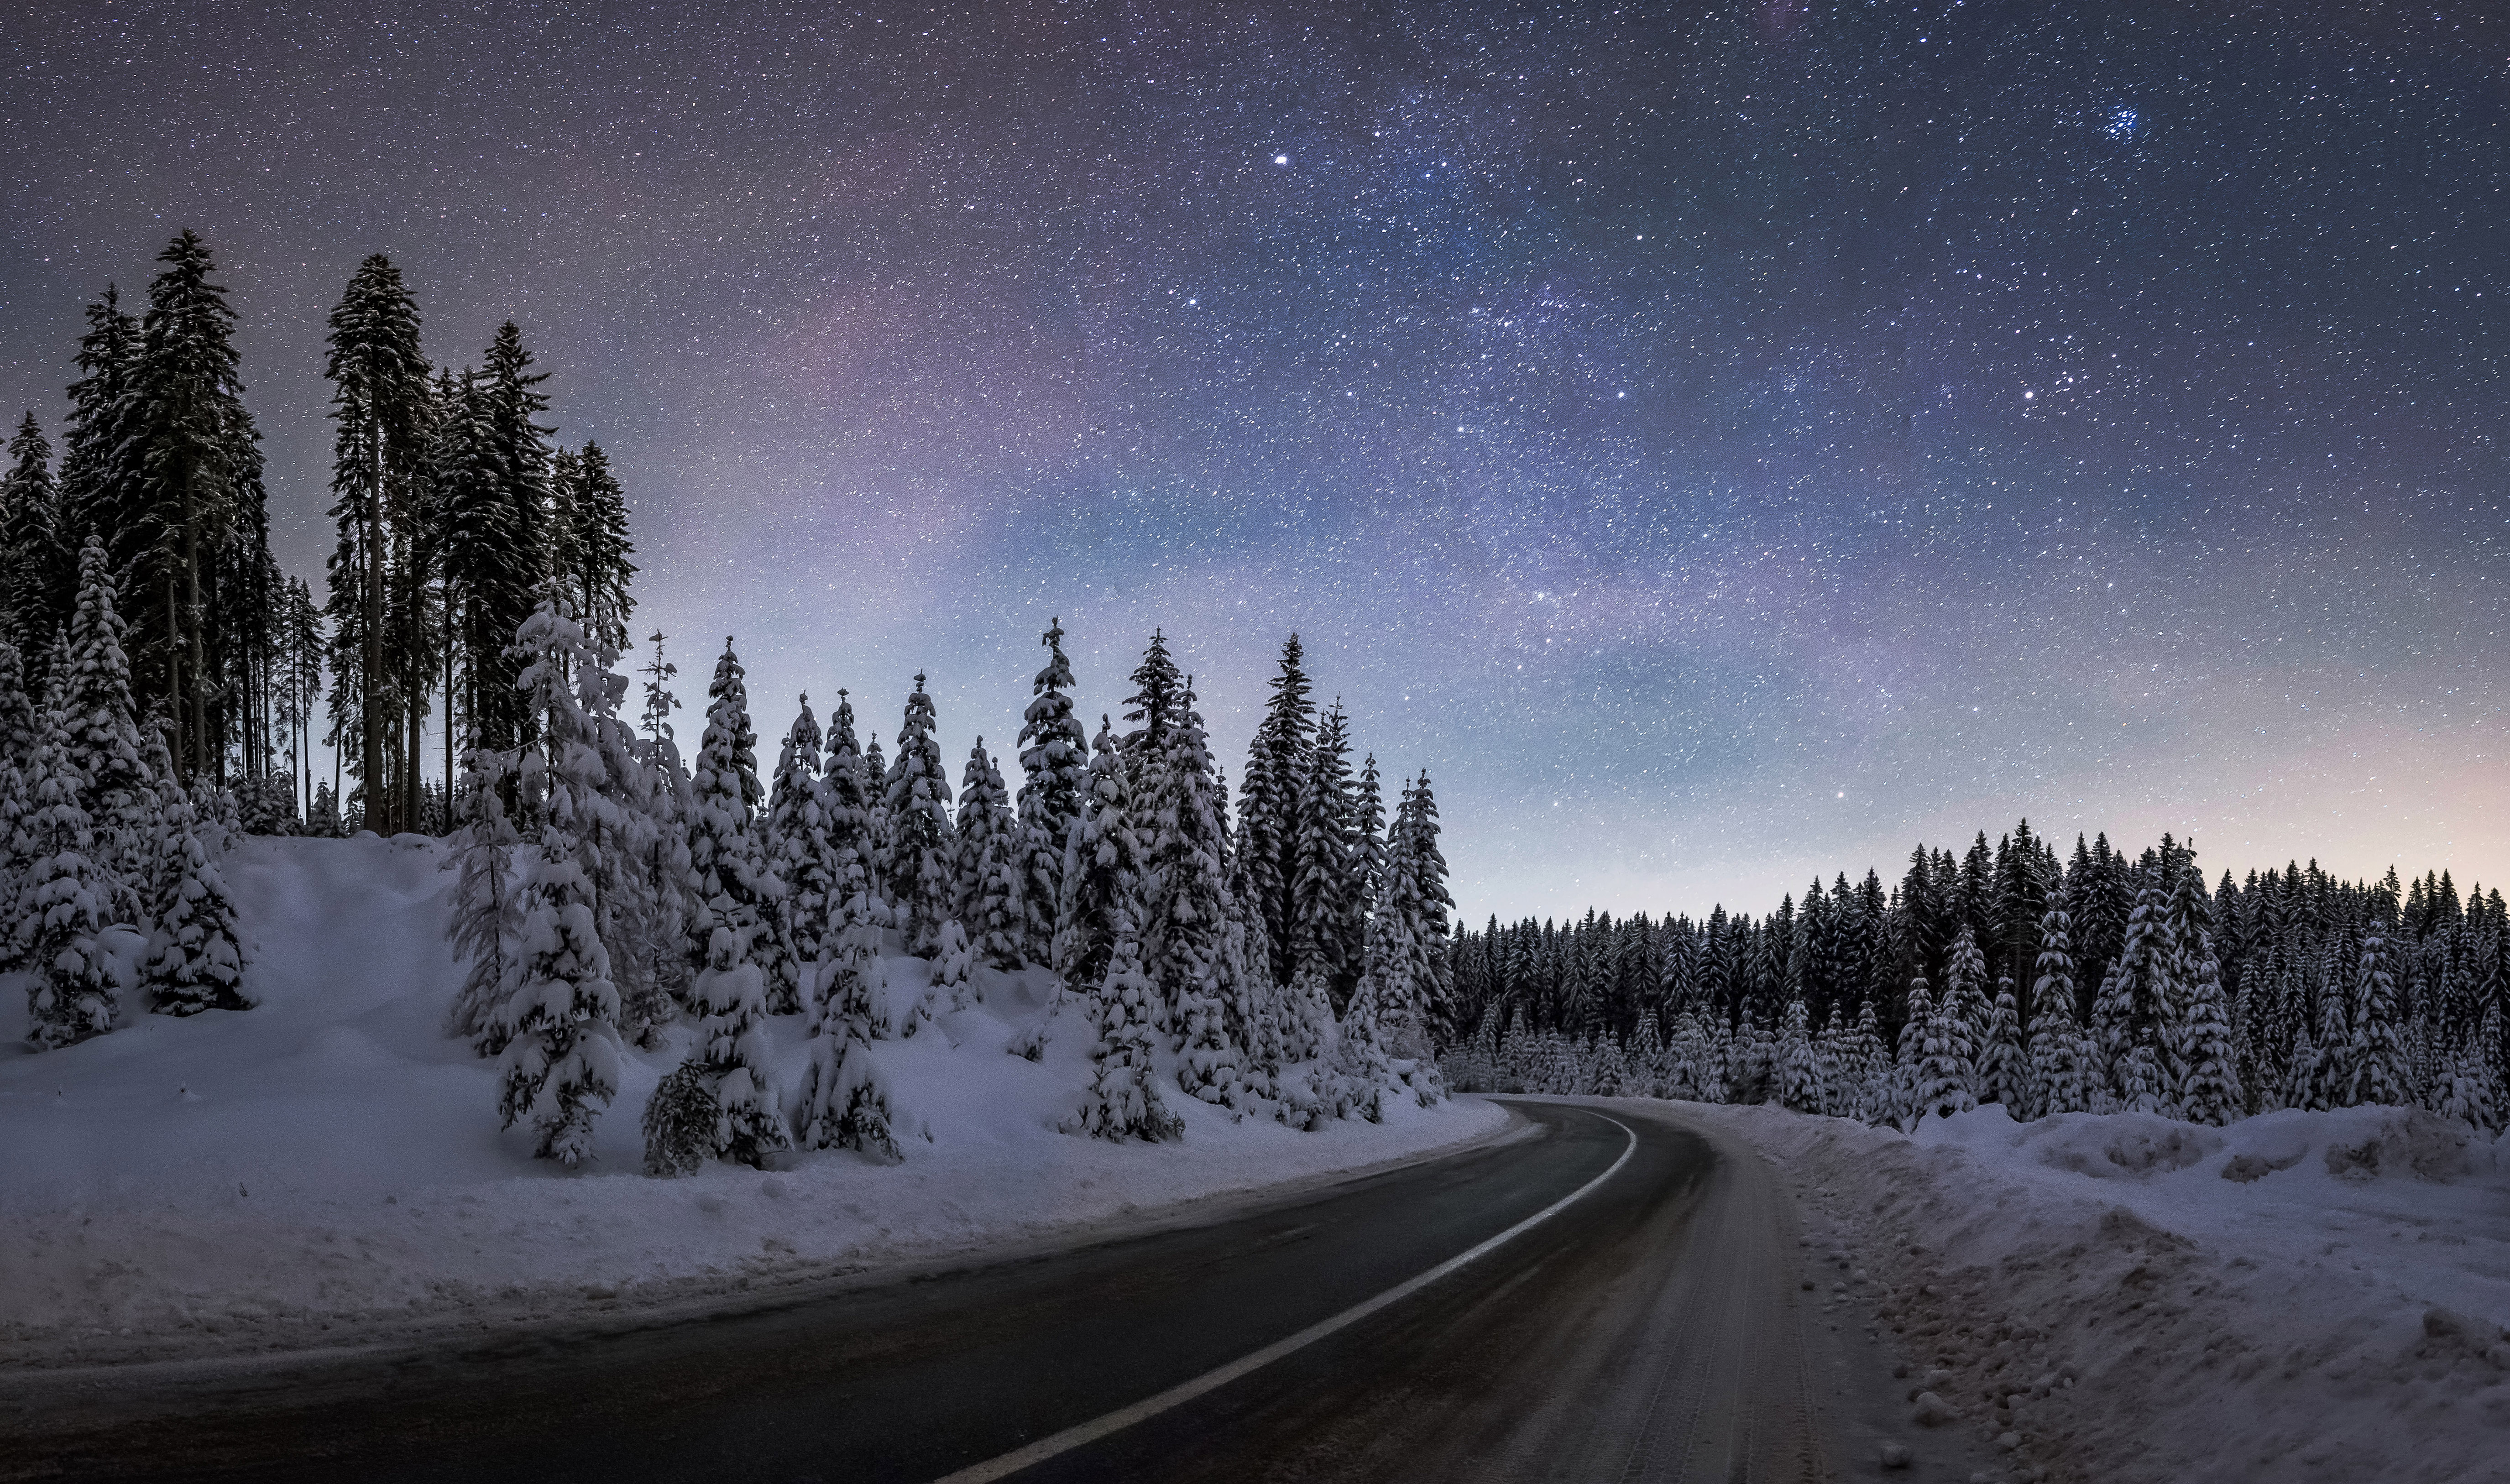 Starry winter night / Landscapes / Postcards / Postallove